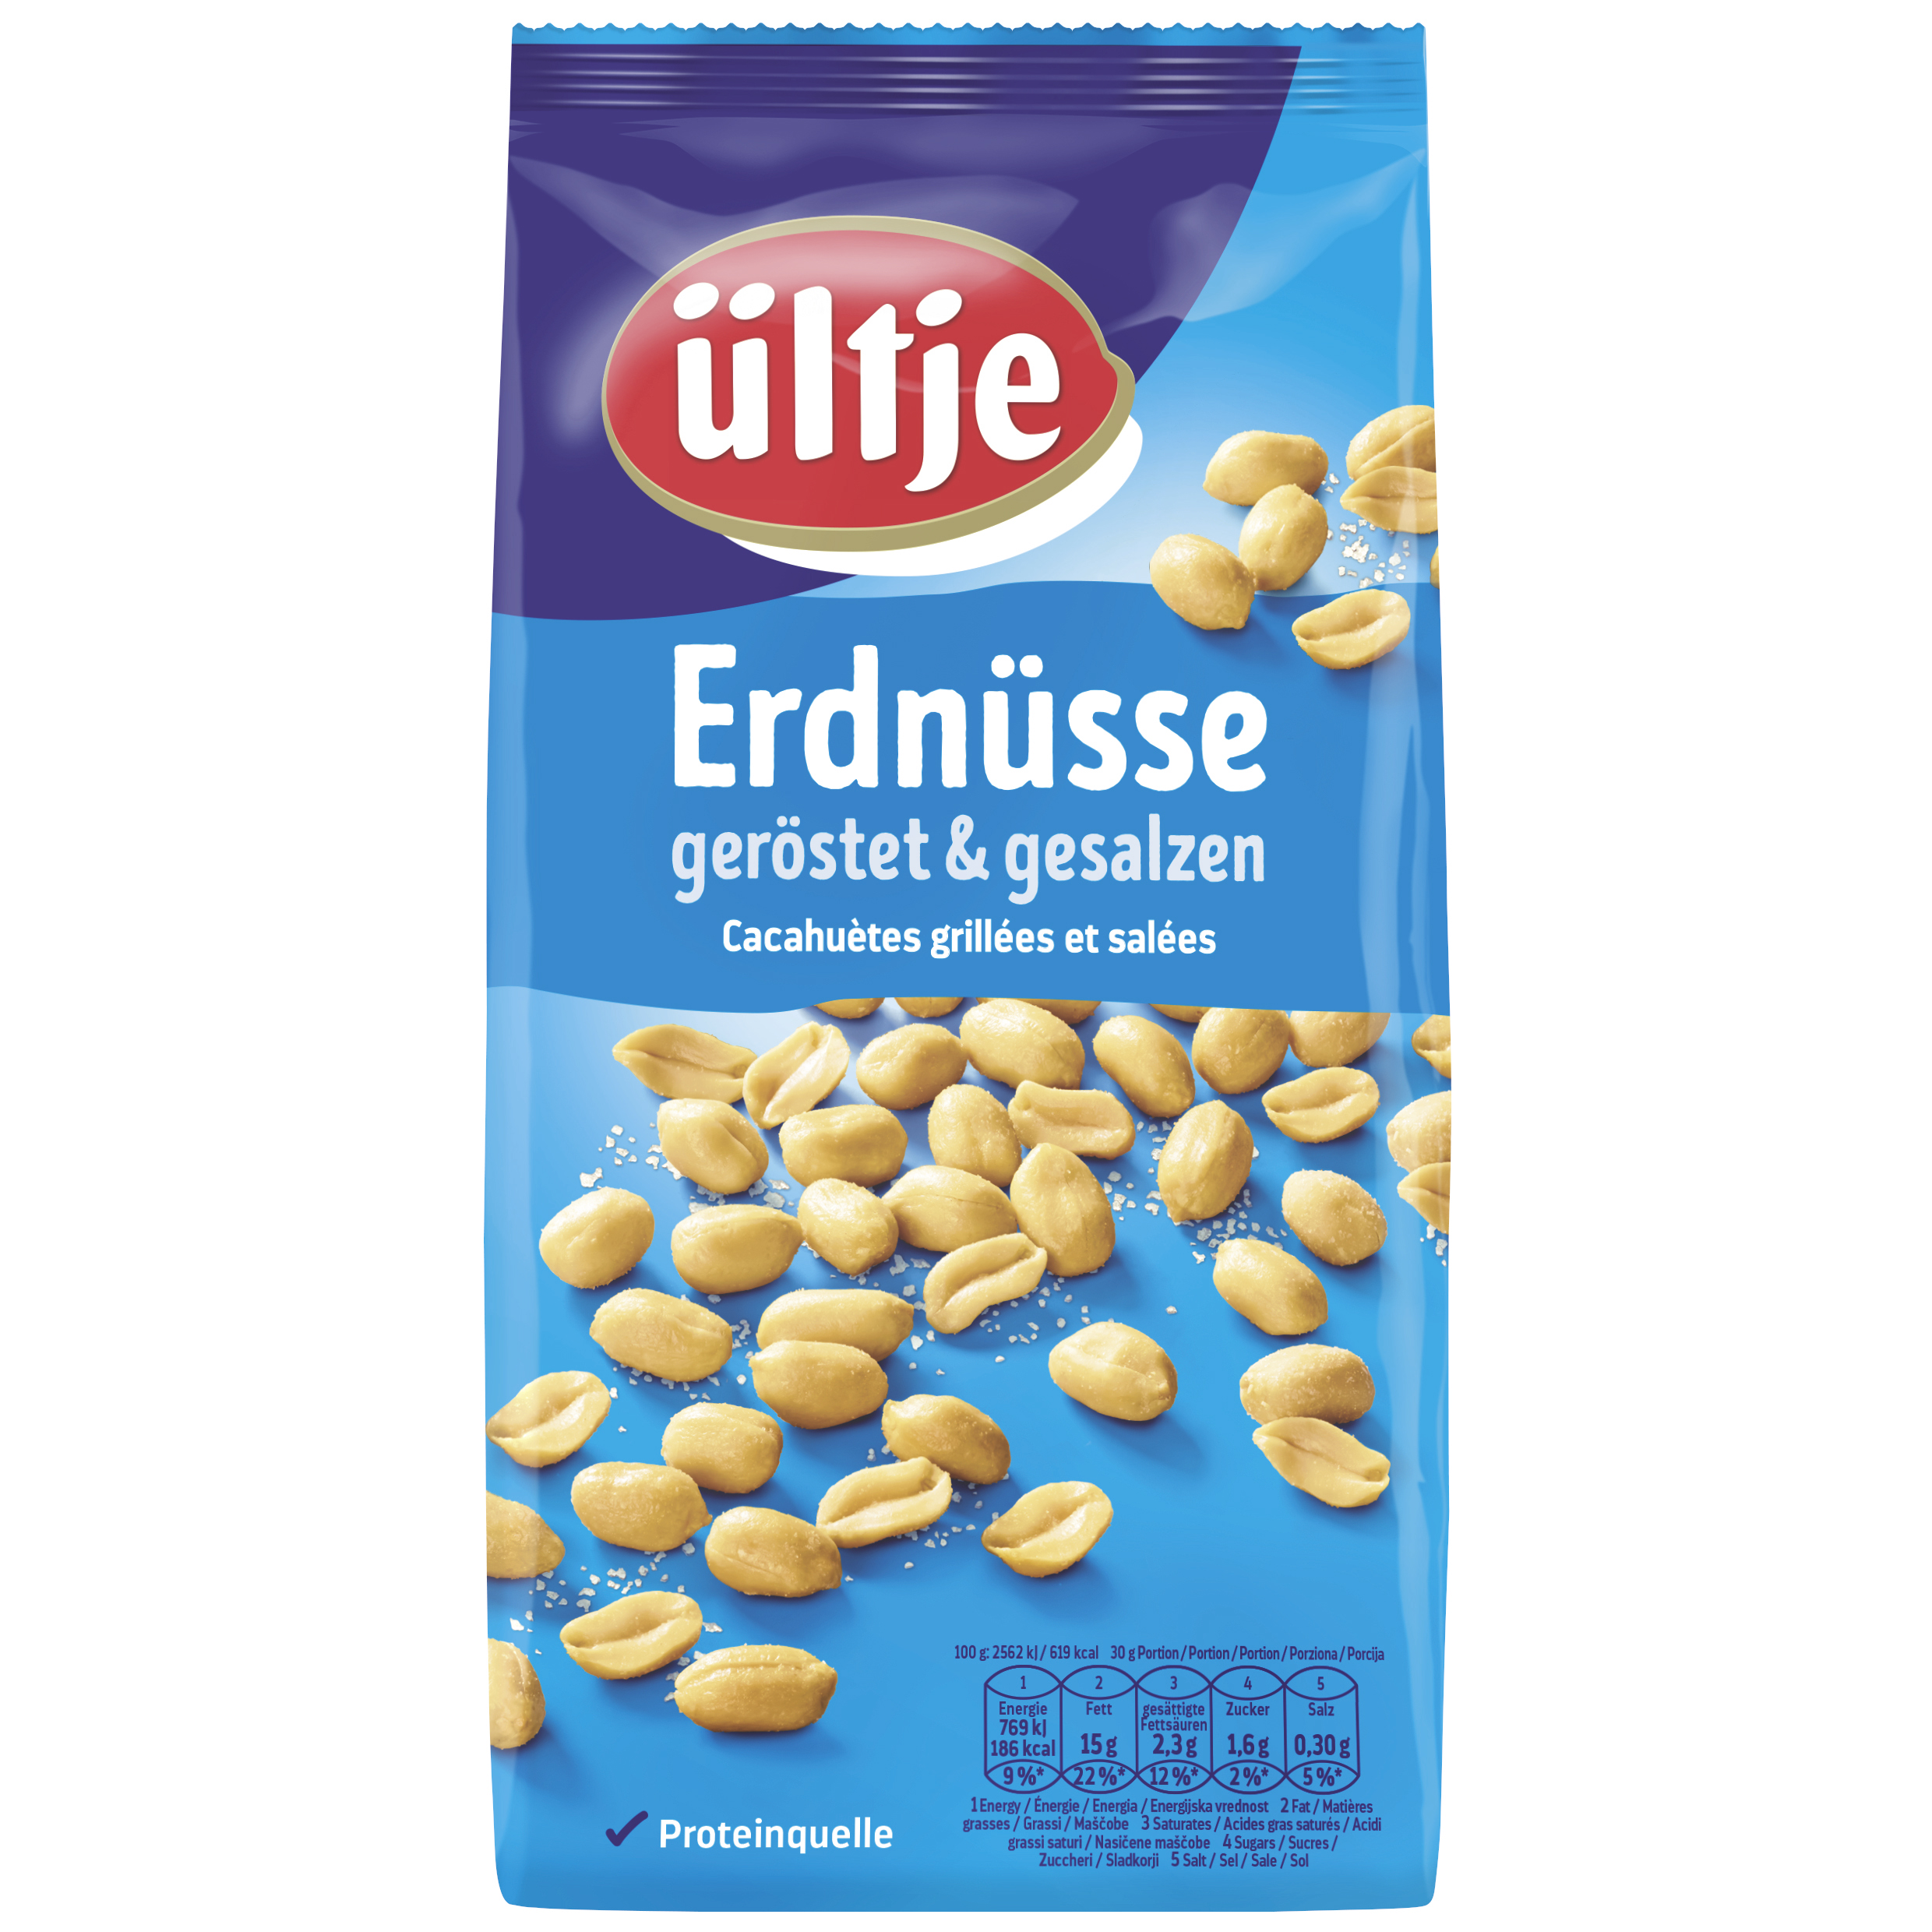 ültje Erdnüsse, geröstet & gesalzen, 900g Beutel